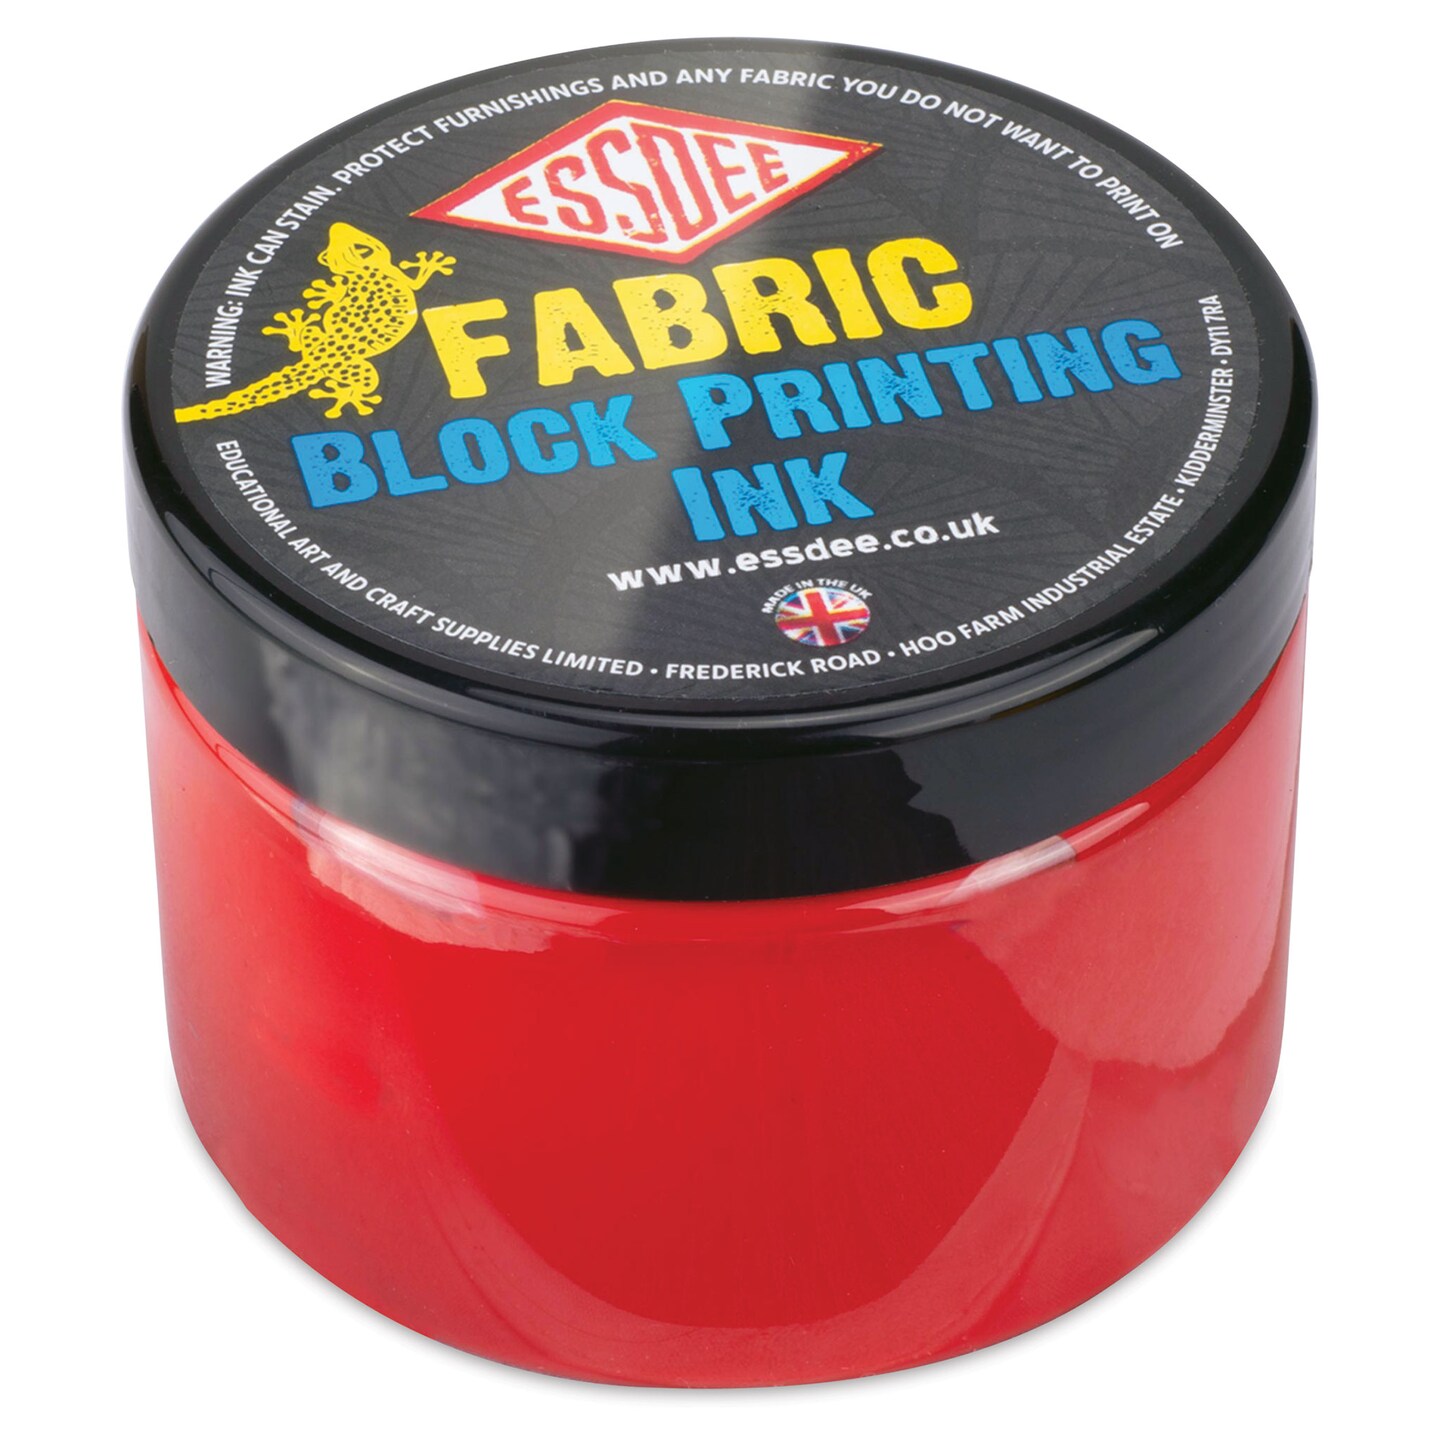 Essdee Fabric Block Printing Inks - Red, 150 ml